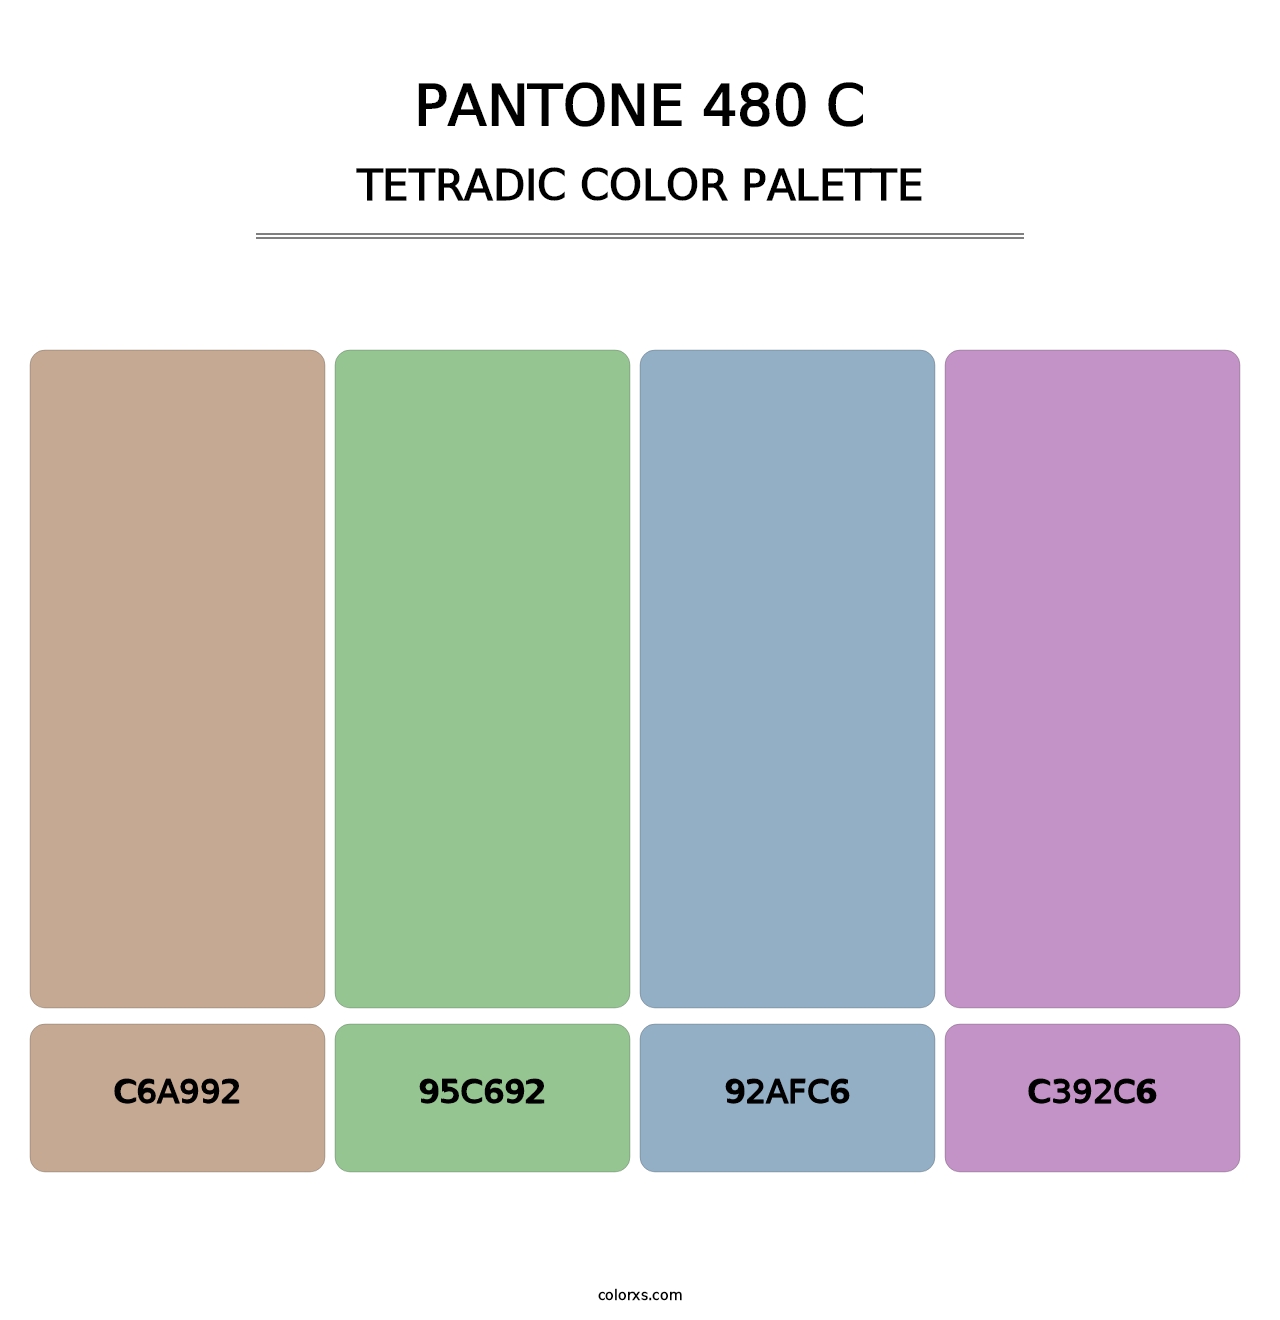 PANTONE 480 C - Tetradic Color Palette